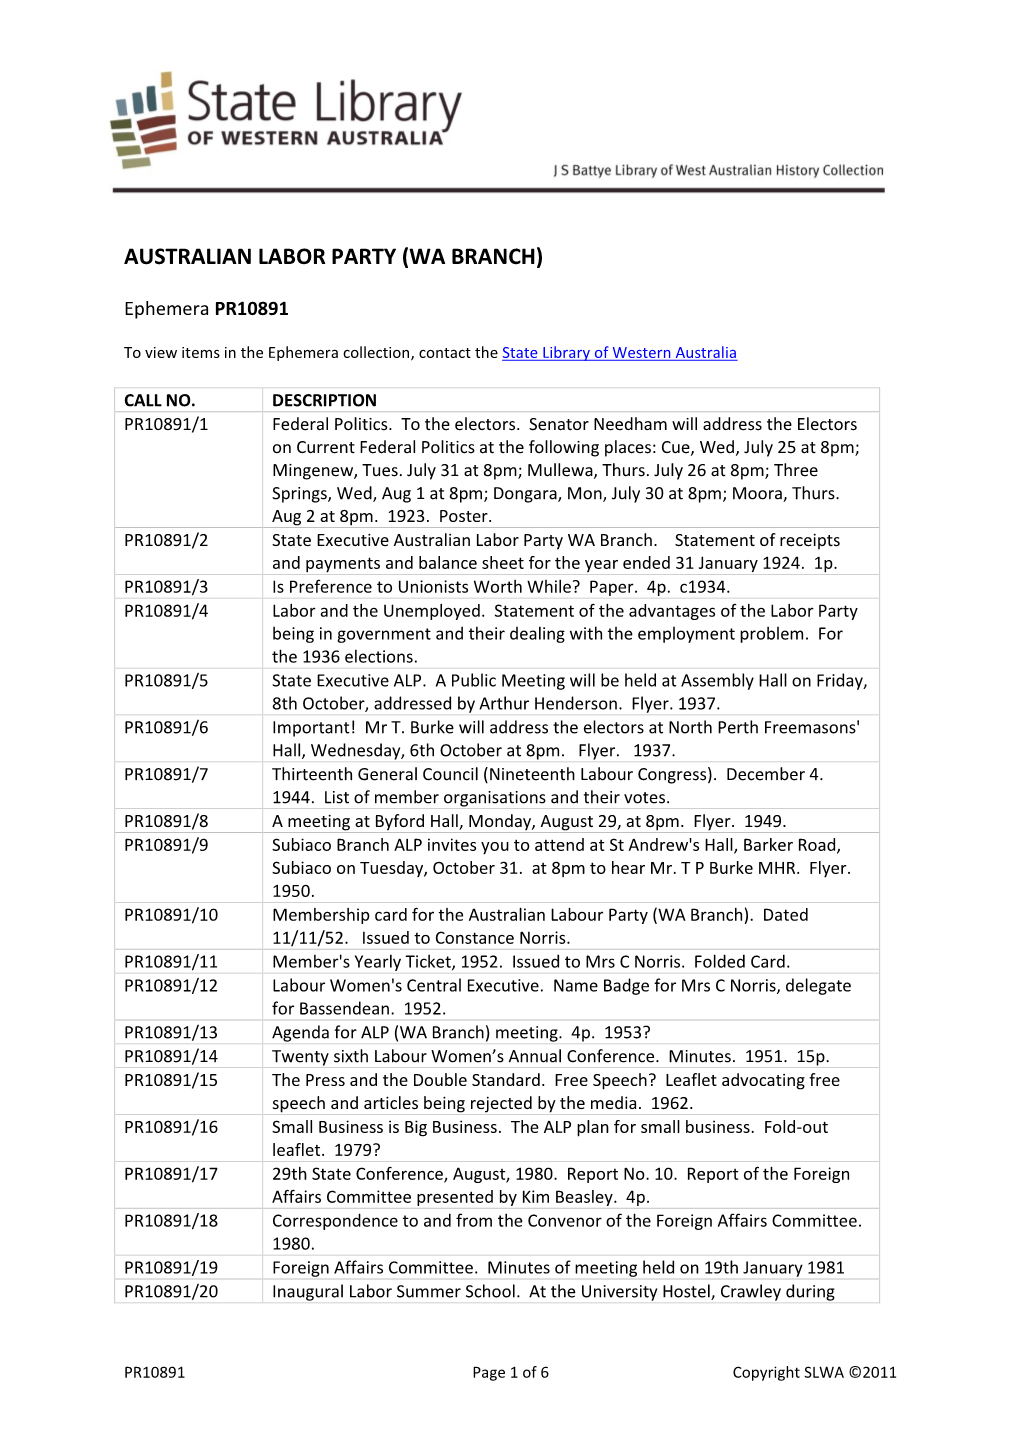 Australian Labor Party (Wa Branch)